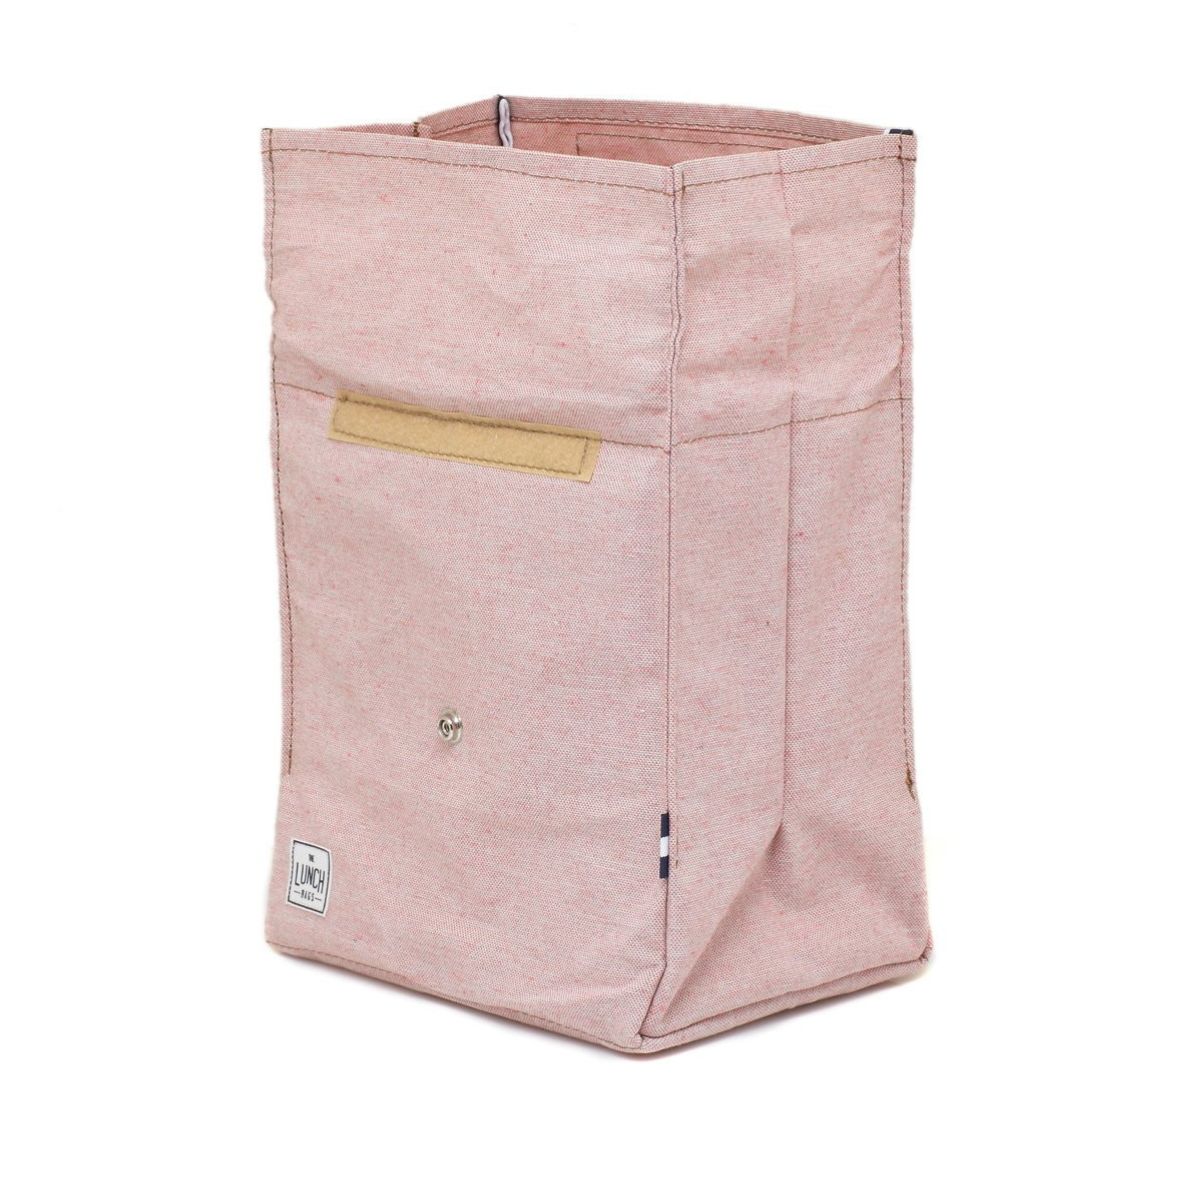 The Lunch Bags Original Ισοθερμική Τσάντα Rose - 5lt